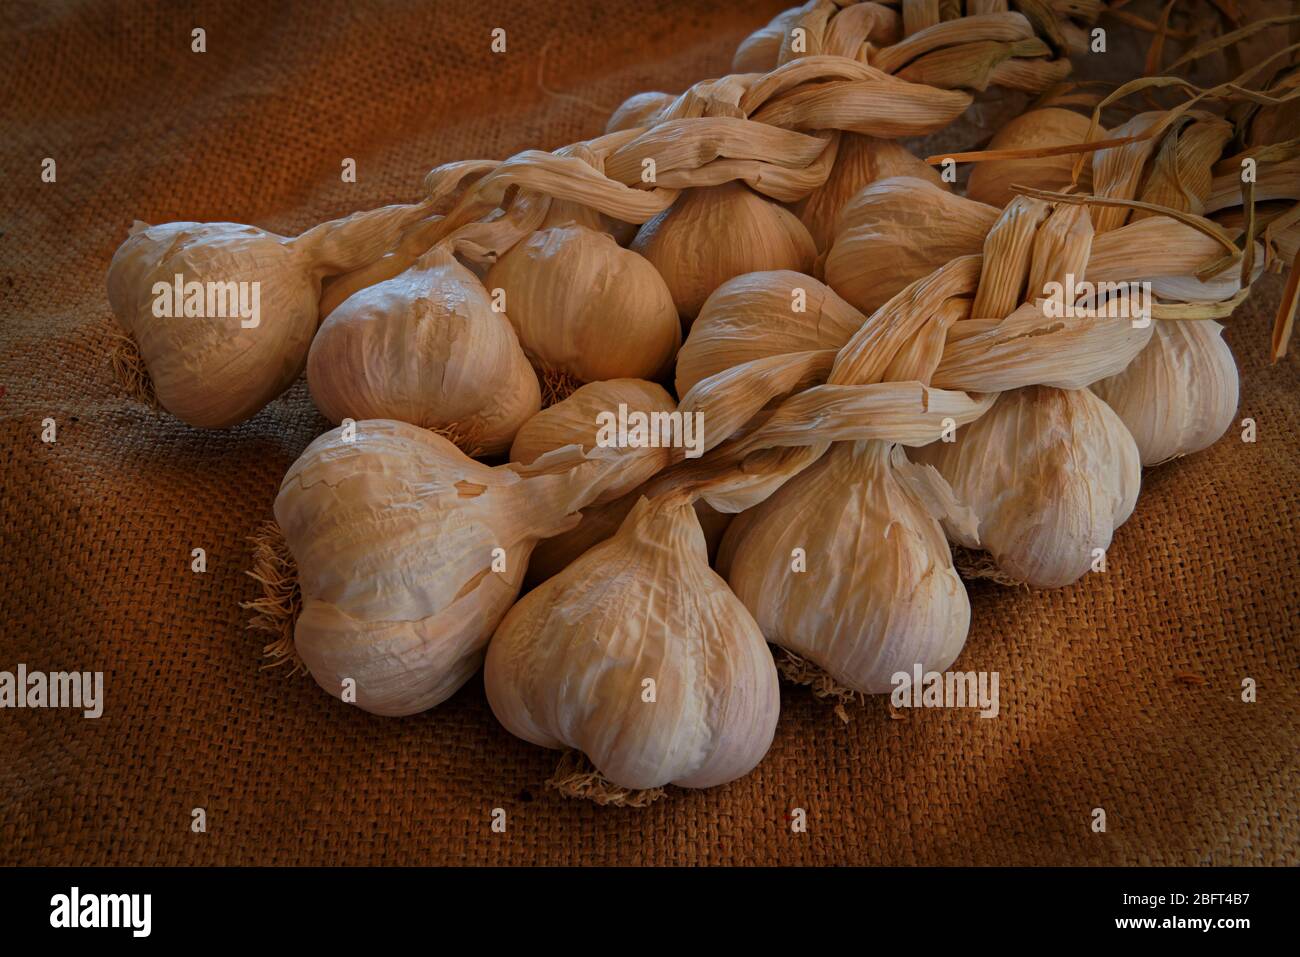 Two garlic plaits on a sack. Home grown organic garlic. Stock Photo